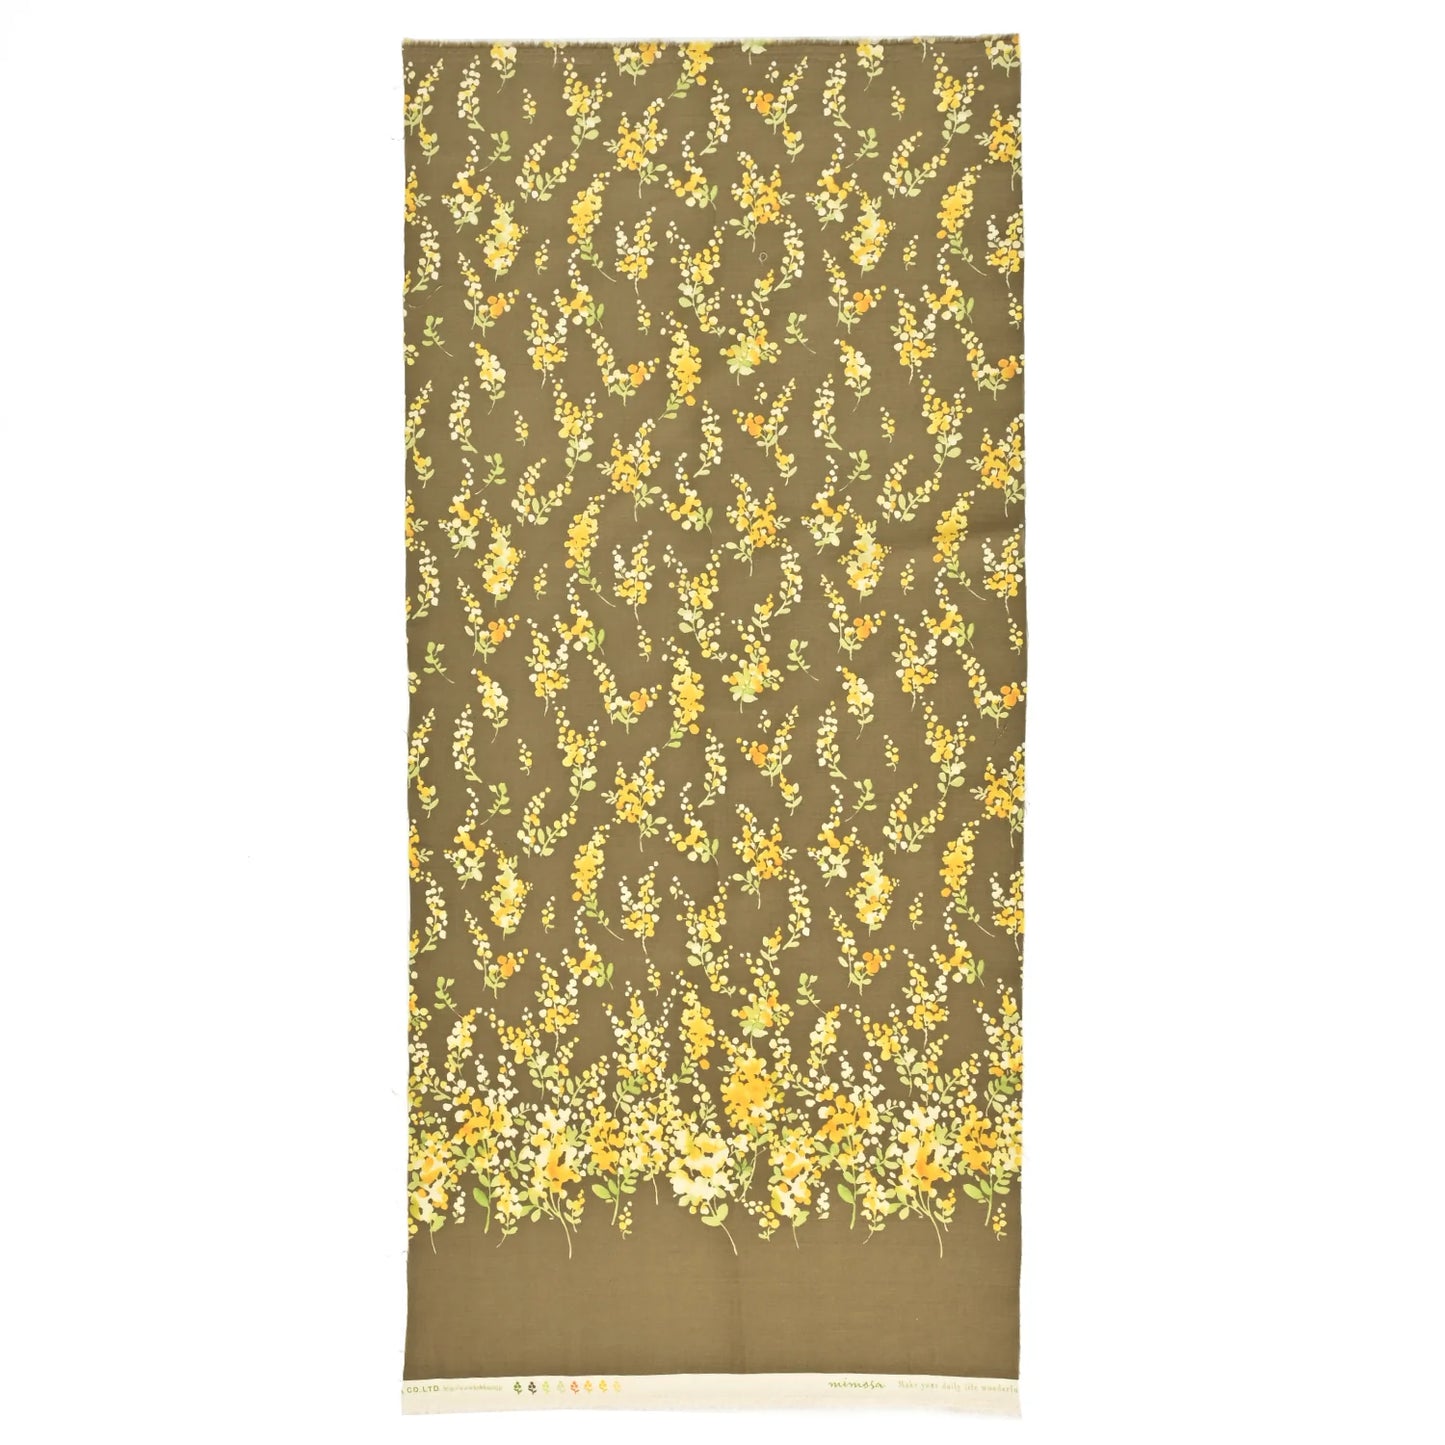 Kokka - Mimosa Hem Border - A - Cotton Poplin Fabric